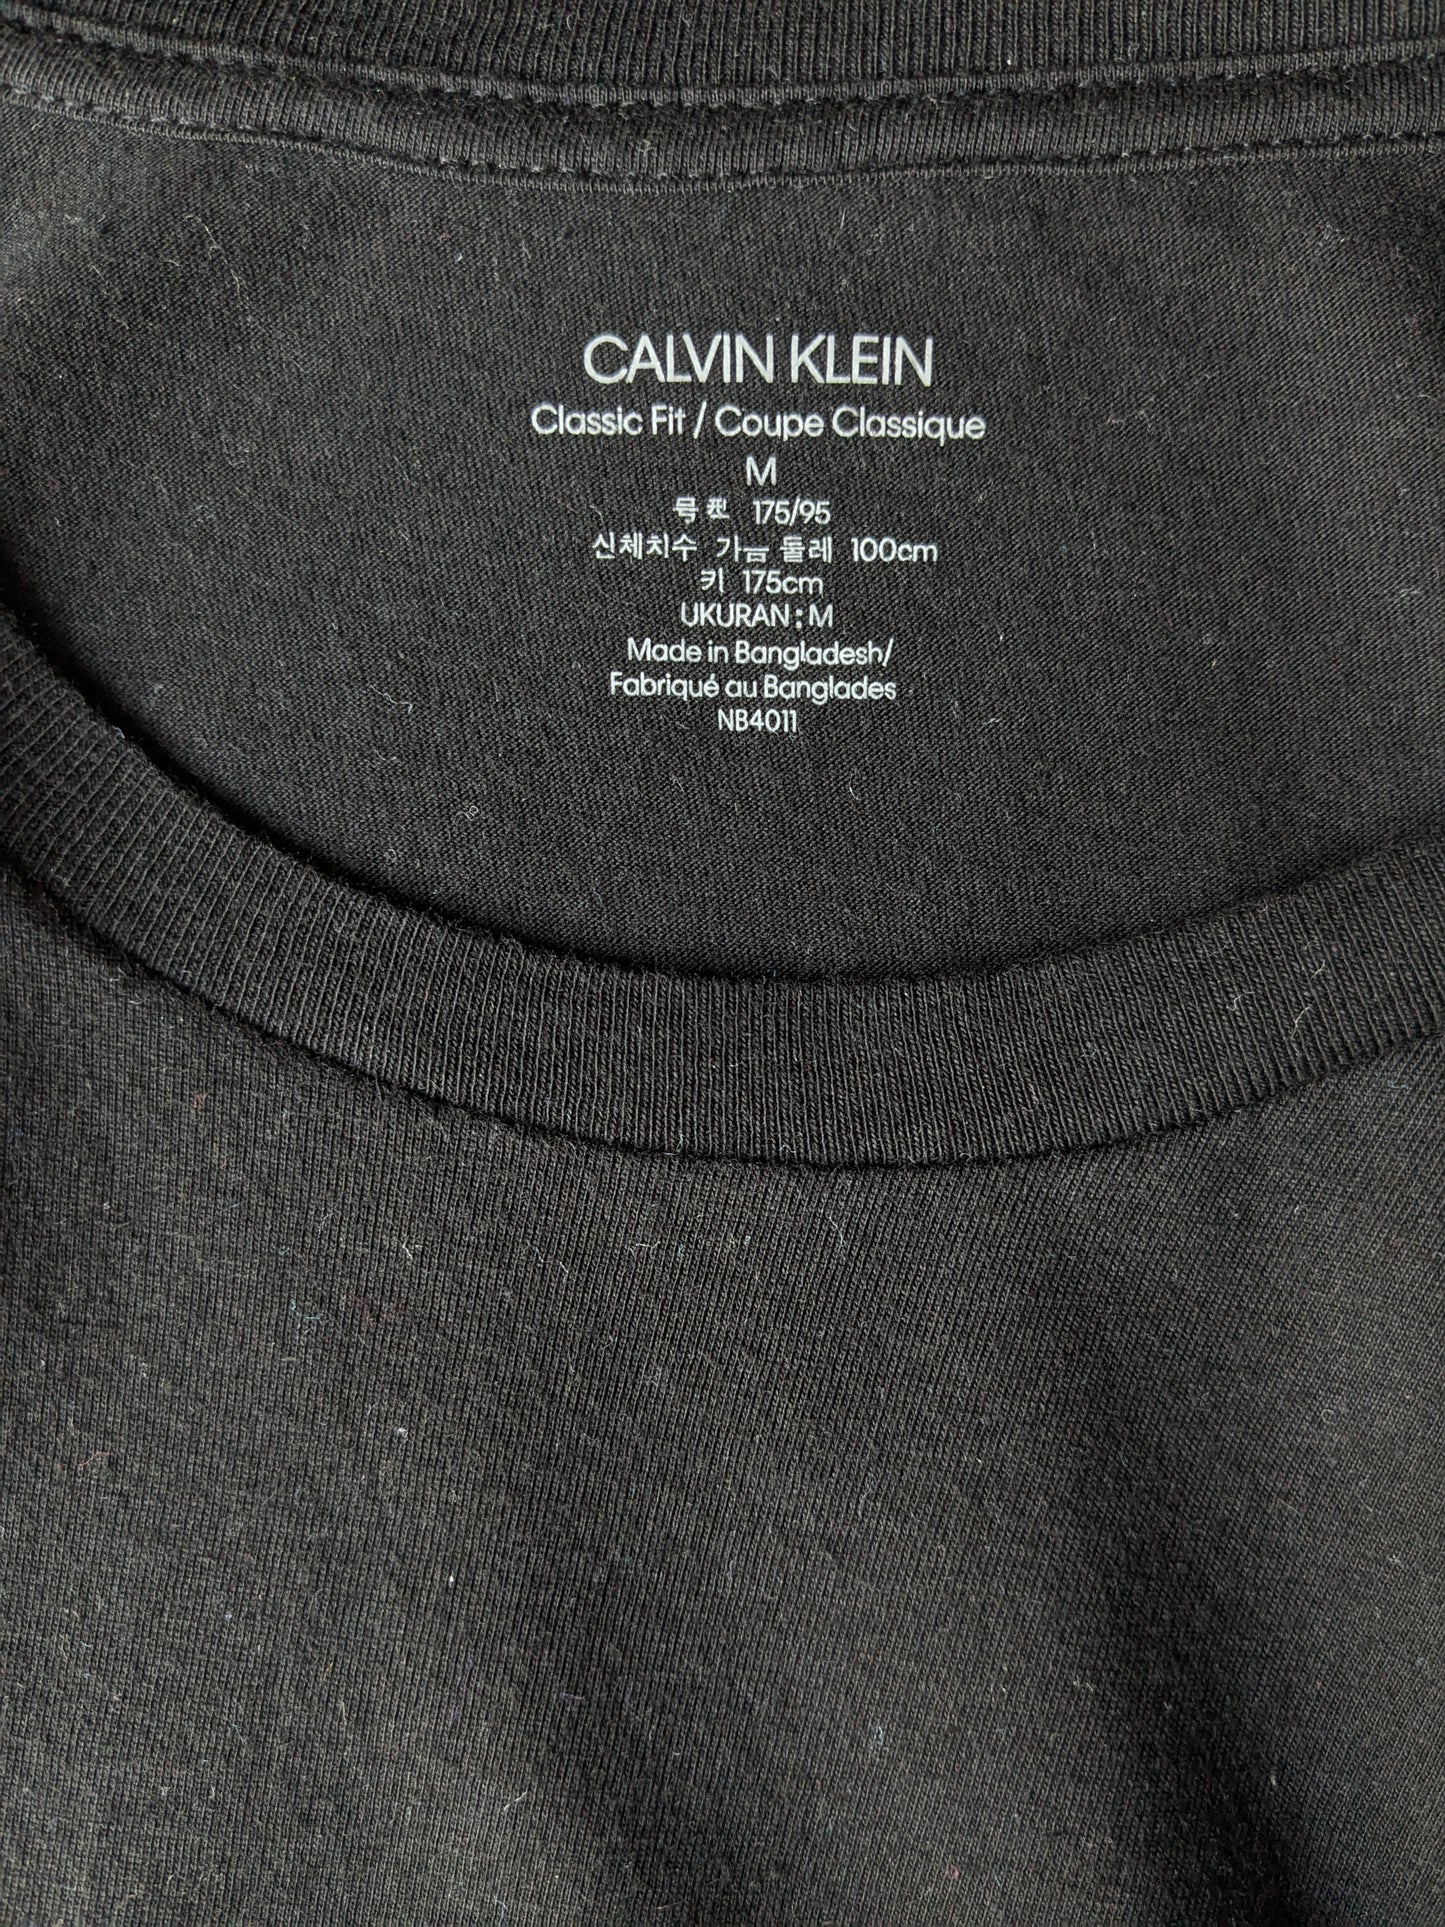 Calvin camisa pequeña. Color negro. Talla M.